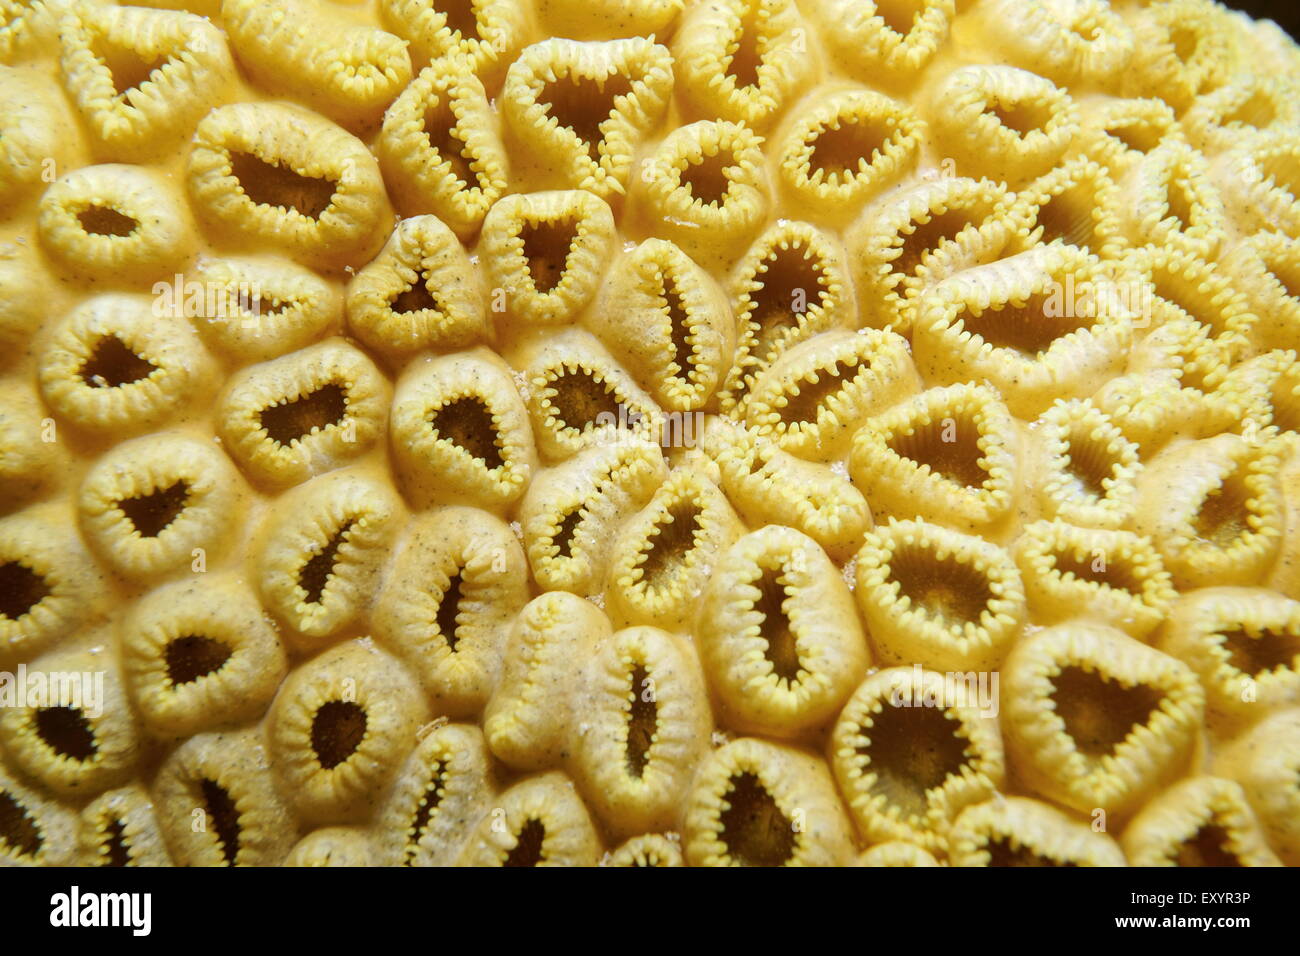 Marine life underwater, colony of white encrusting zoanthid, Palythoa caribaeorum, in the Caribbean sea Stock Photo